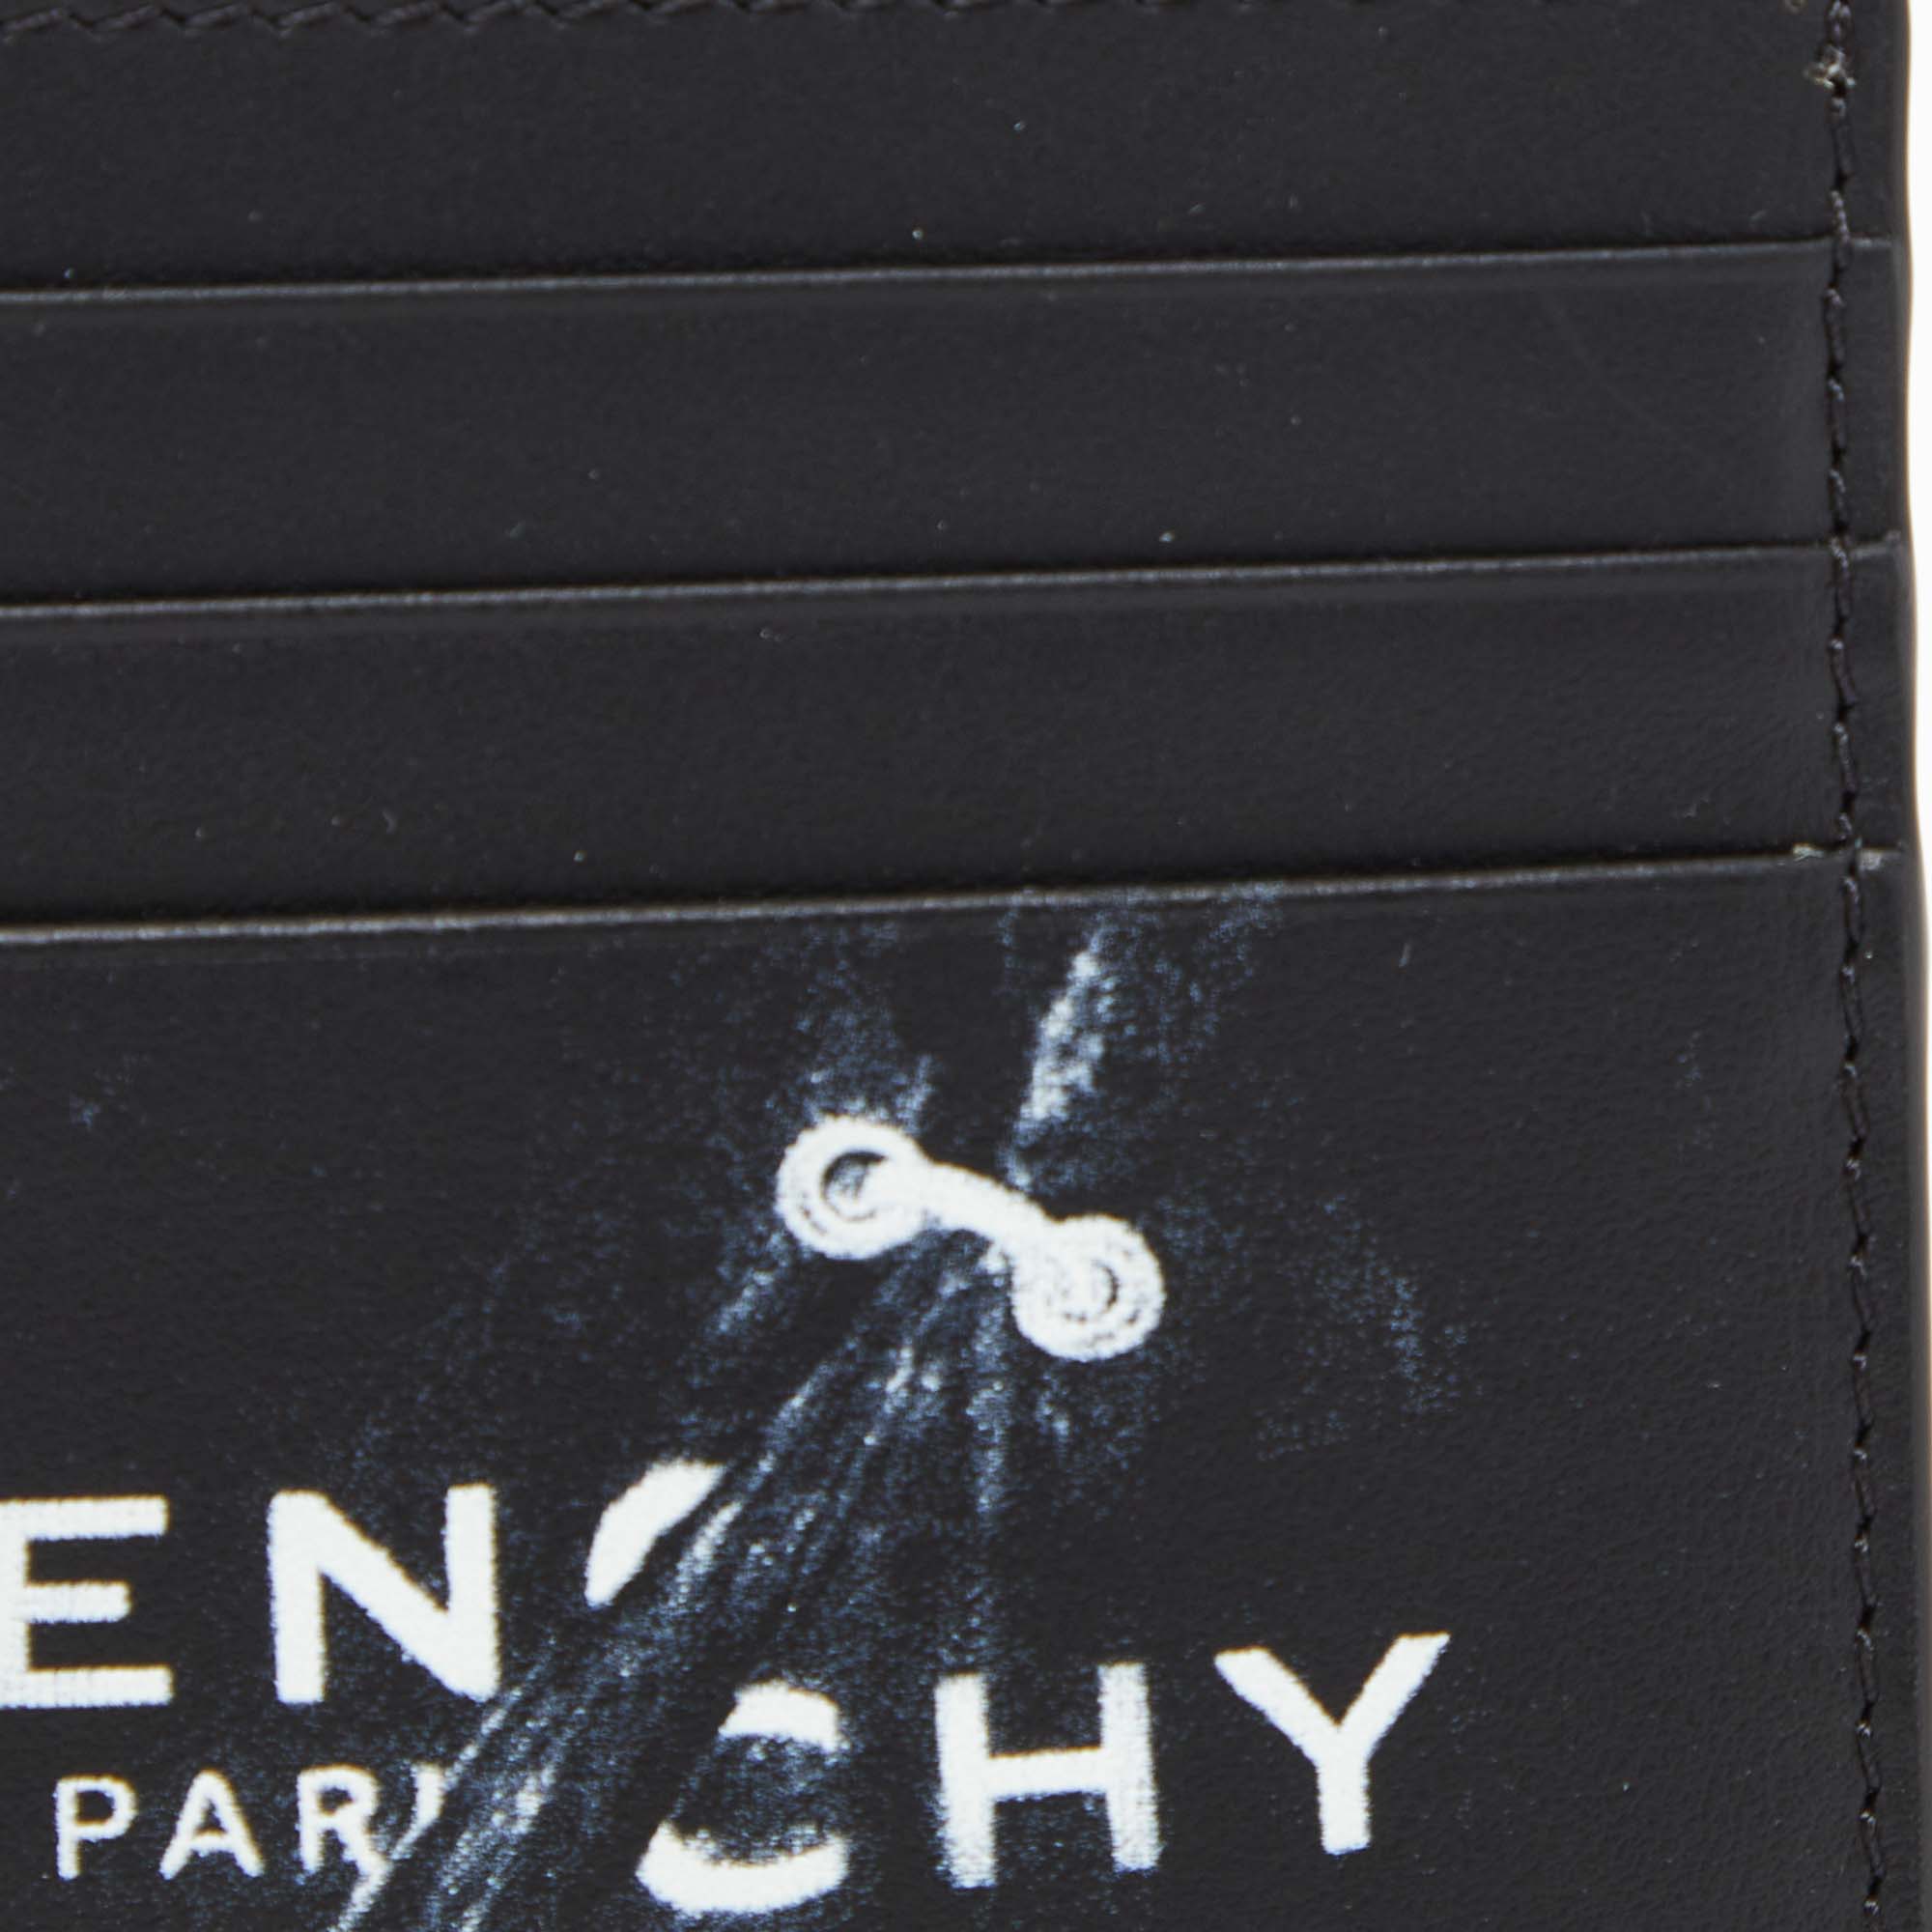 Givenchy Black Leather Logo Card Holder